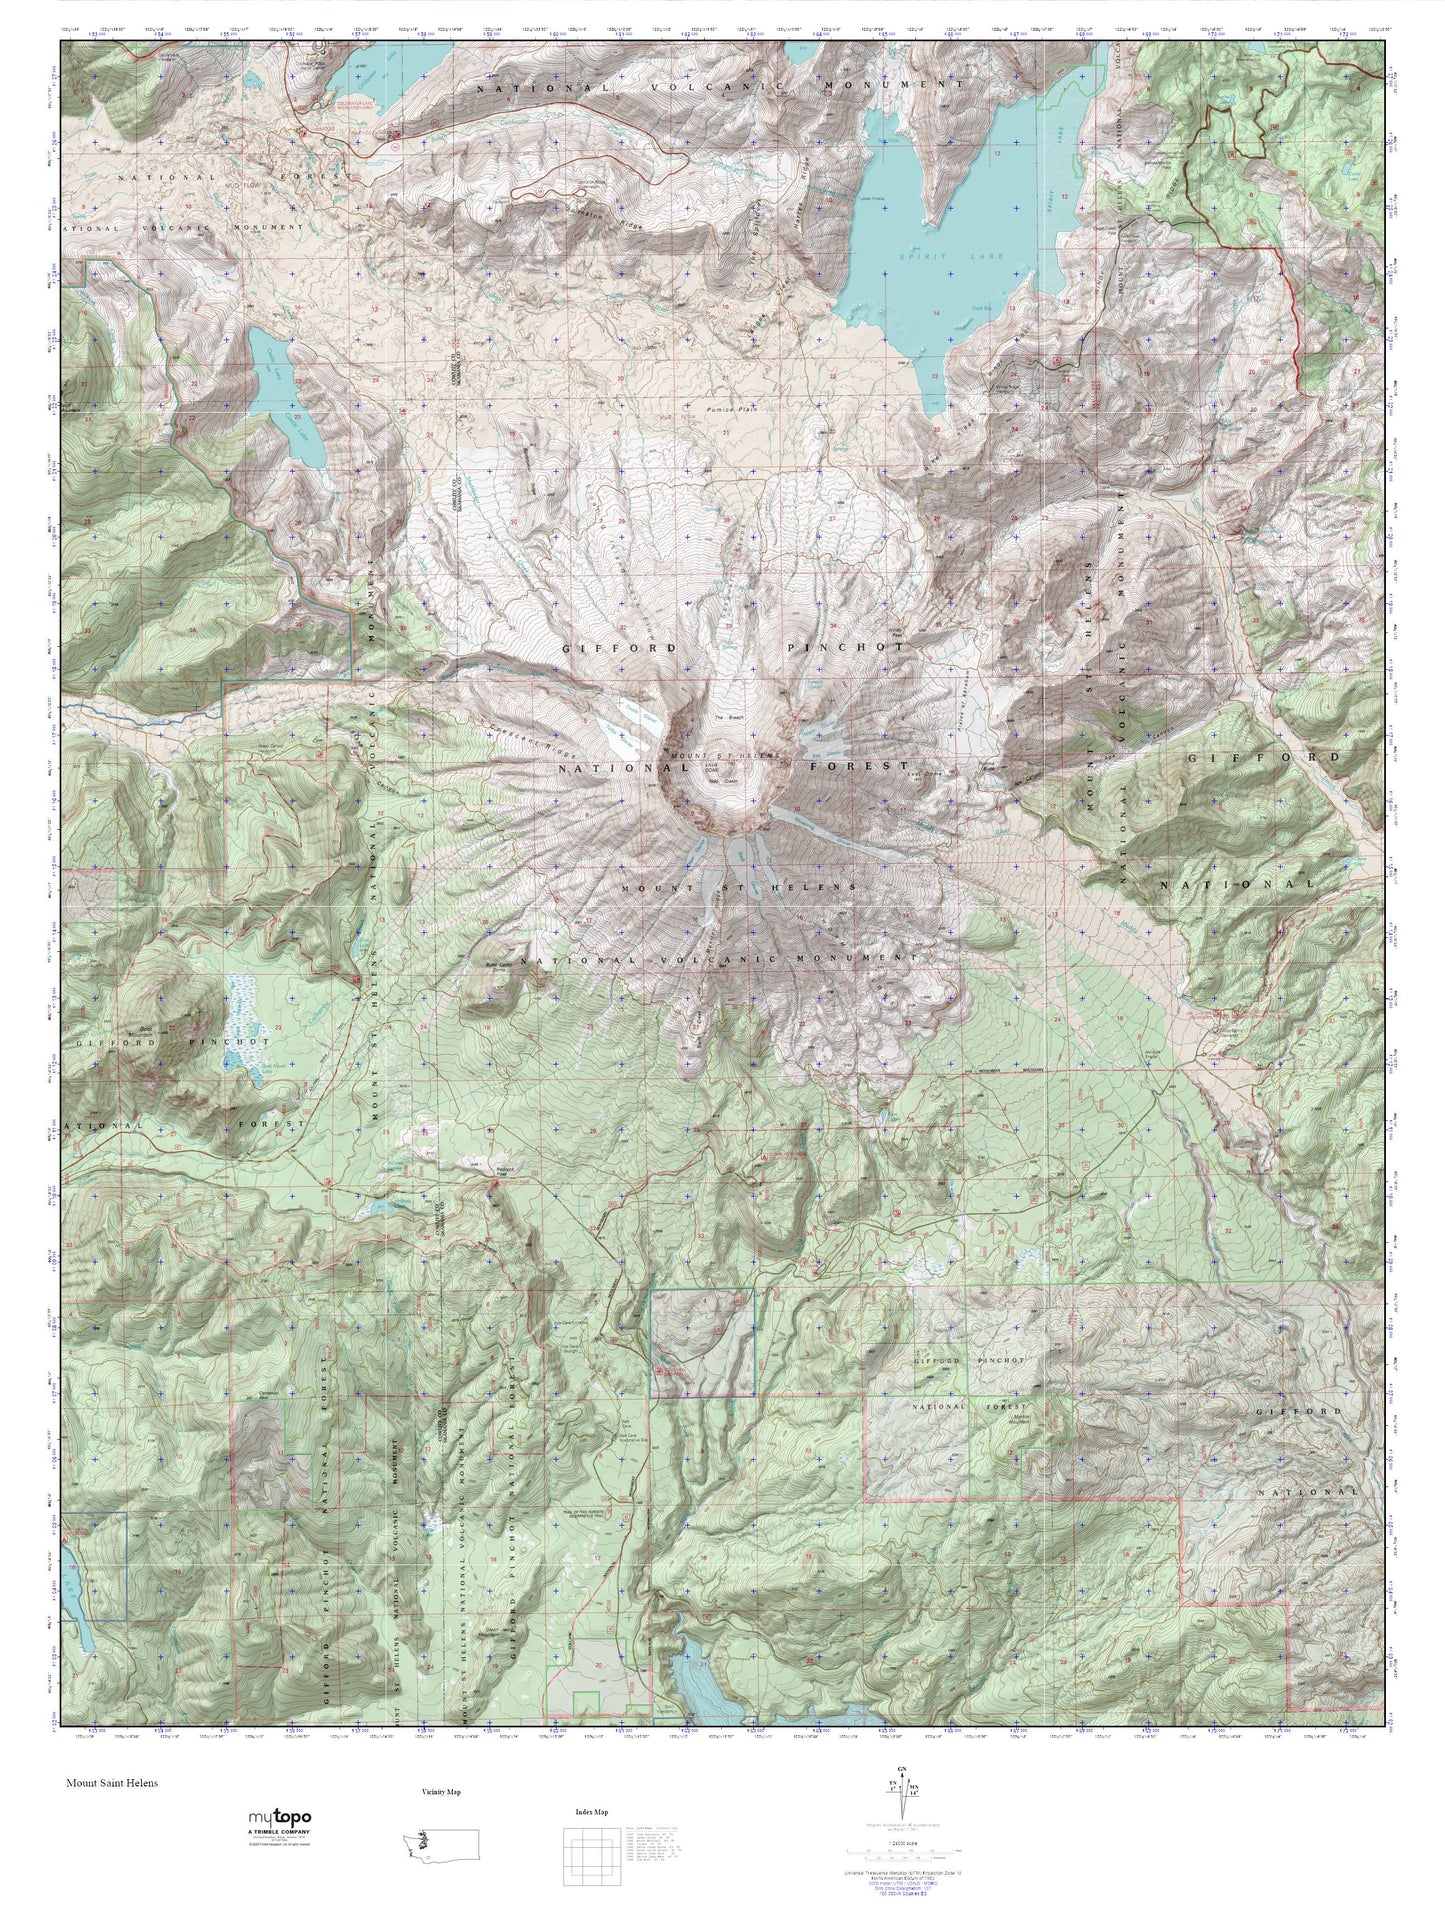 Mount Saint Helens MyTopo Explorer Series Map Image